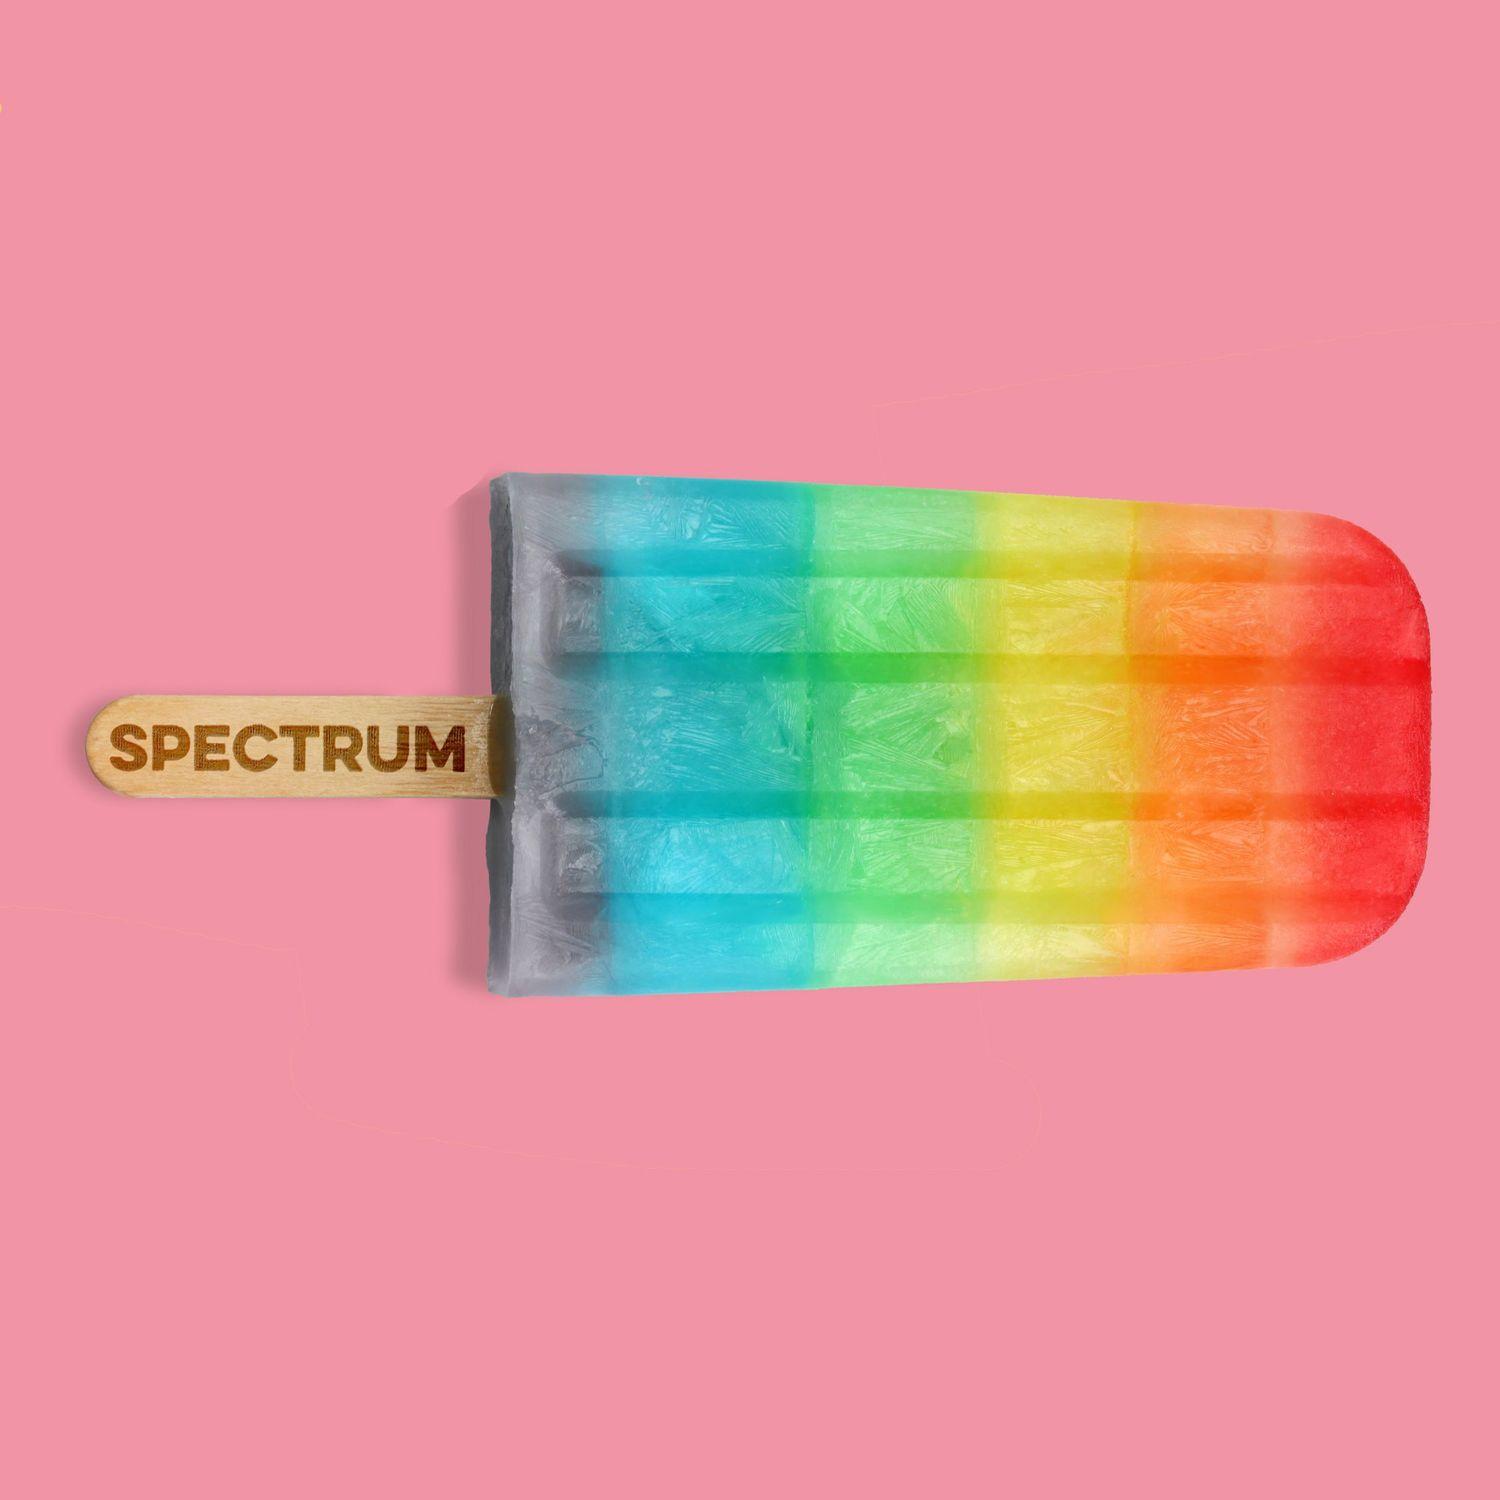 SPECTRUM - A pop-up art show celebrating colour  | LoveJordan, Ella Freire, Michael Wallner | J/M Gallery